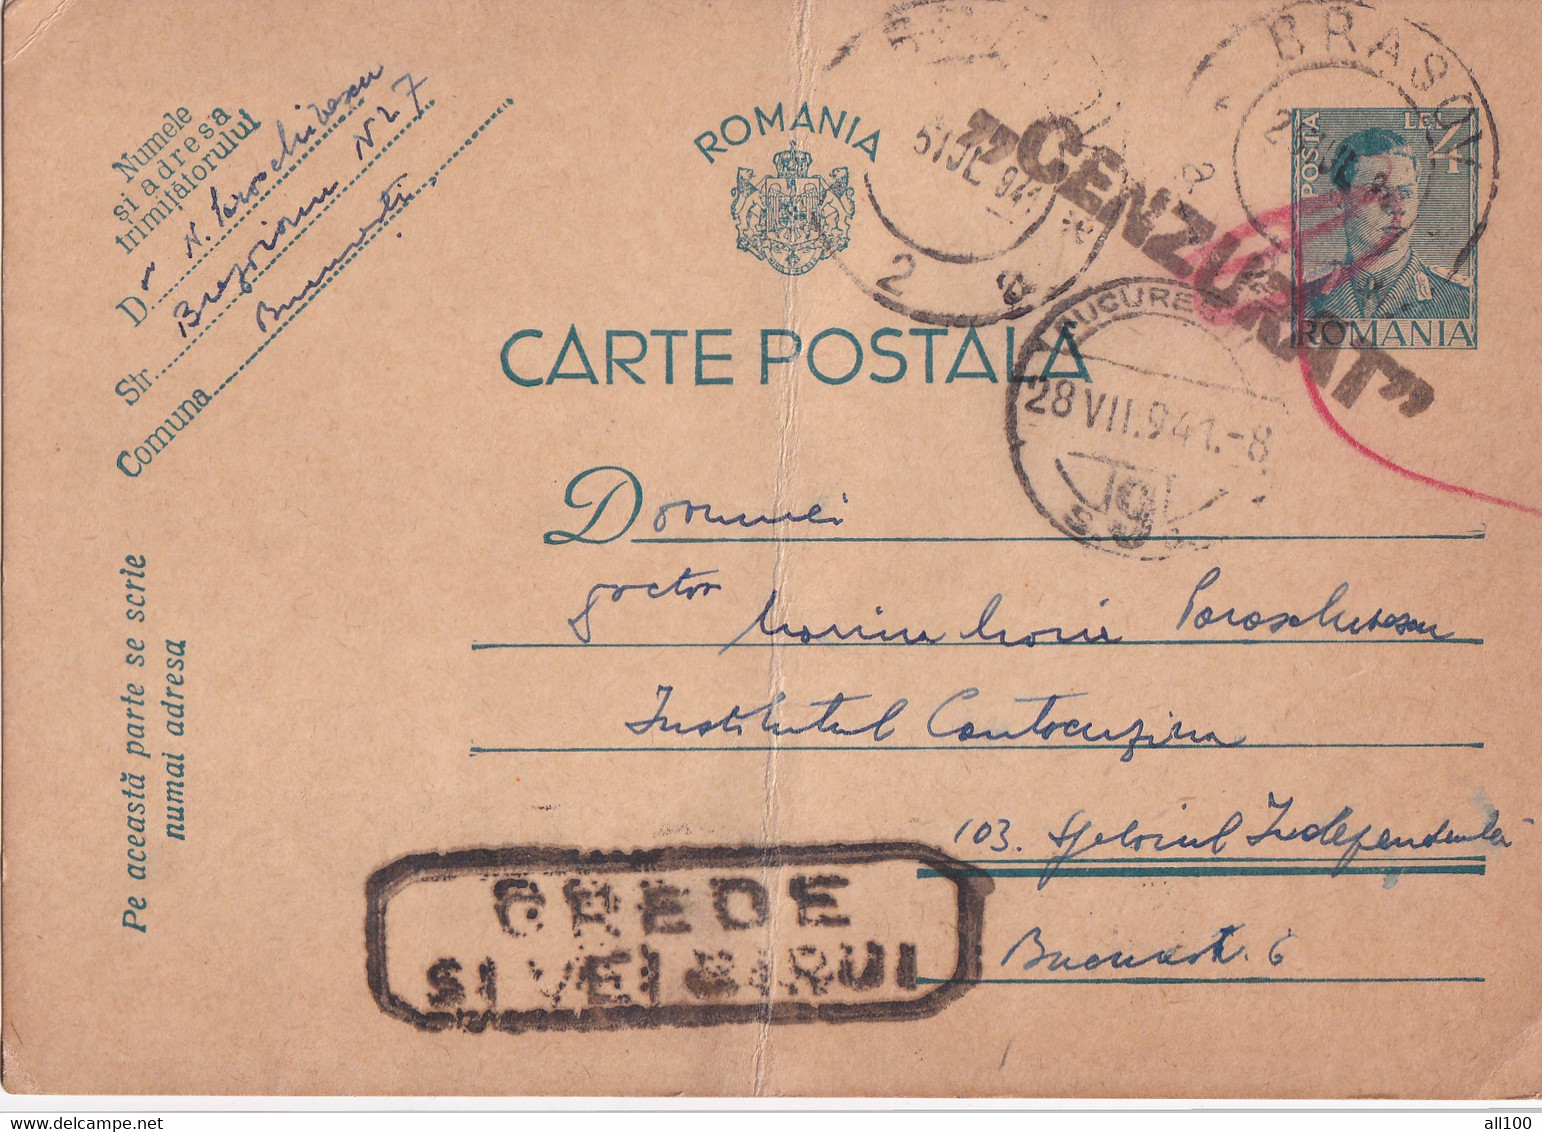 A16458 - MILITARY LETTER ROMANIA POSTAL STATIONERY CENZORED BRASOV  CREDE SI VEI BIRUI STAMPEL  KING MICHAEL 4 LEI 1941 - Cartas De La Segunda Guerra Mundial